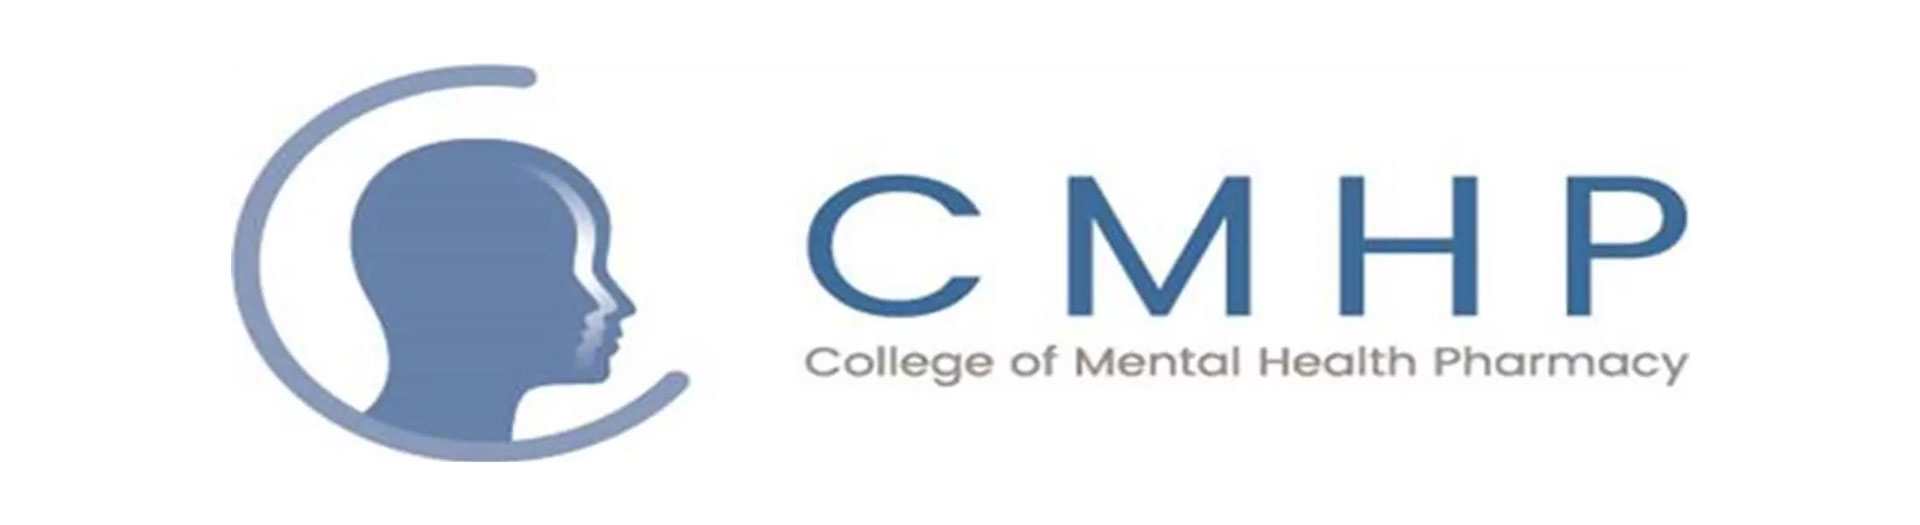 College of mental health pharmacy logo.